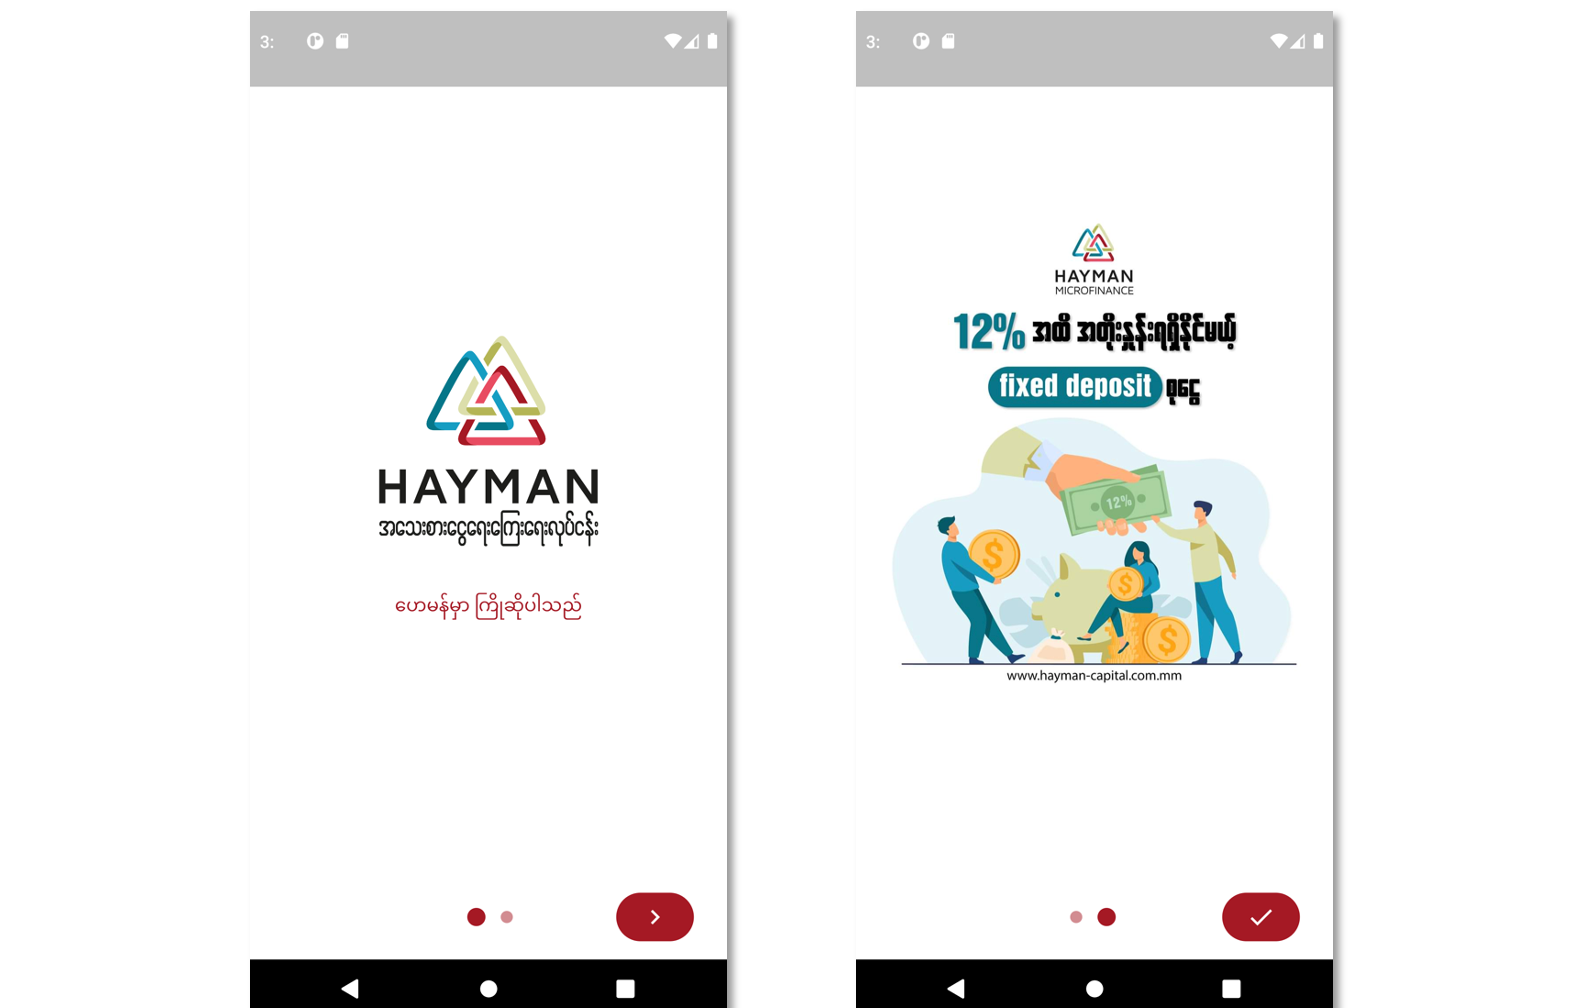 Hayman Microfinance launch client mobile banking app on Musoni APIs